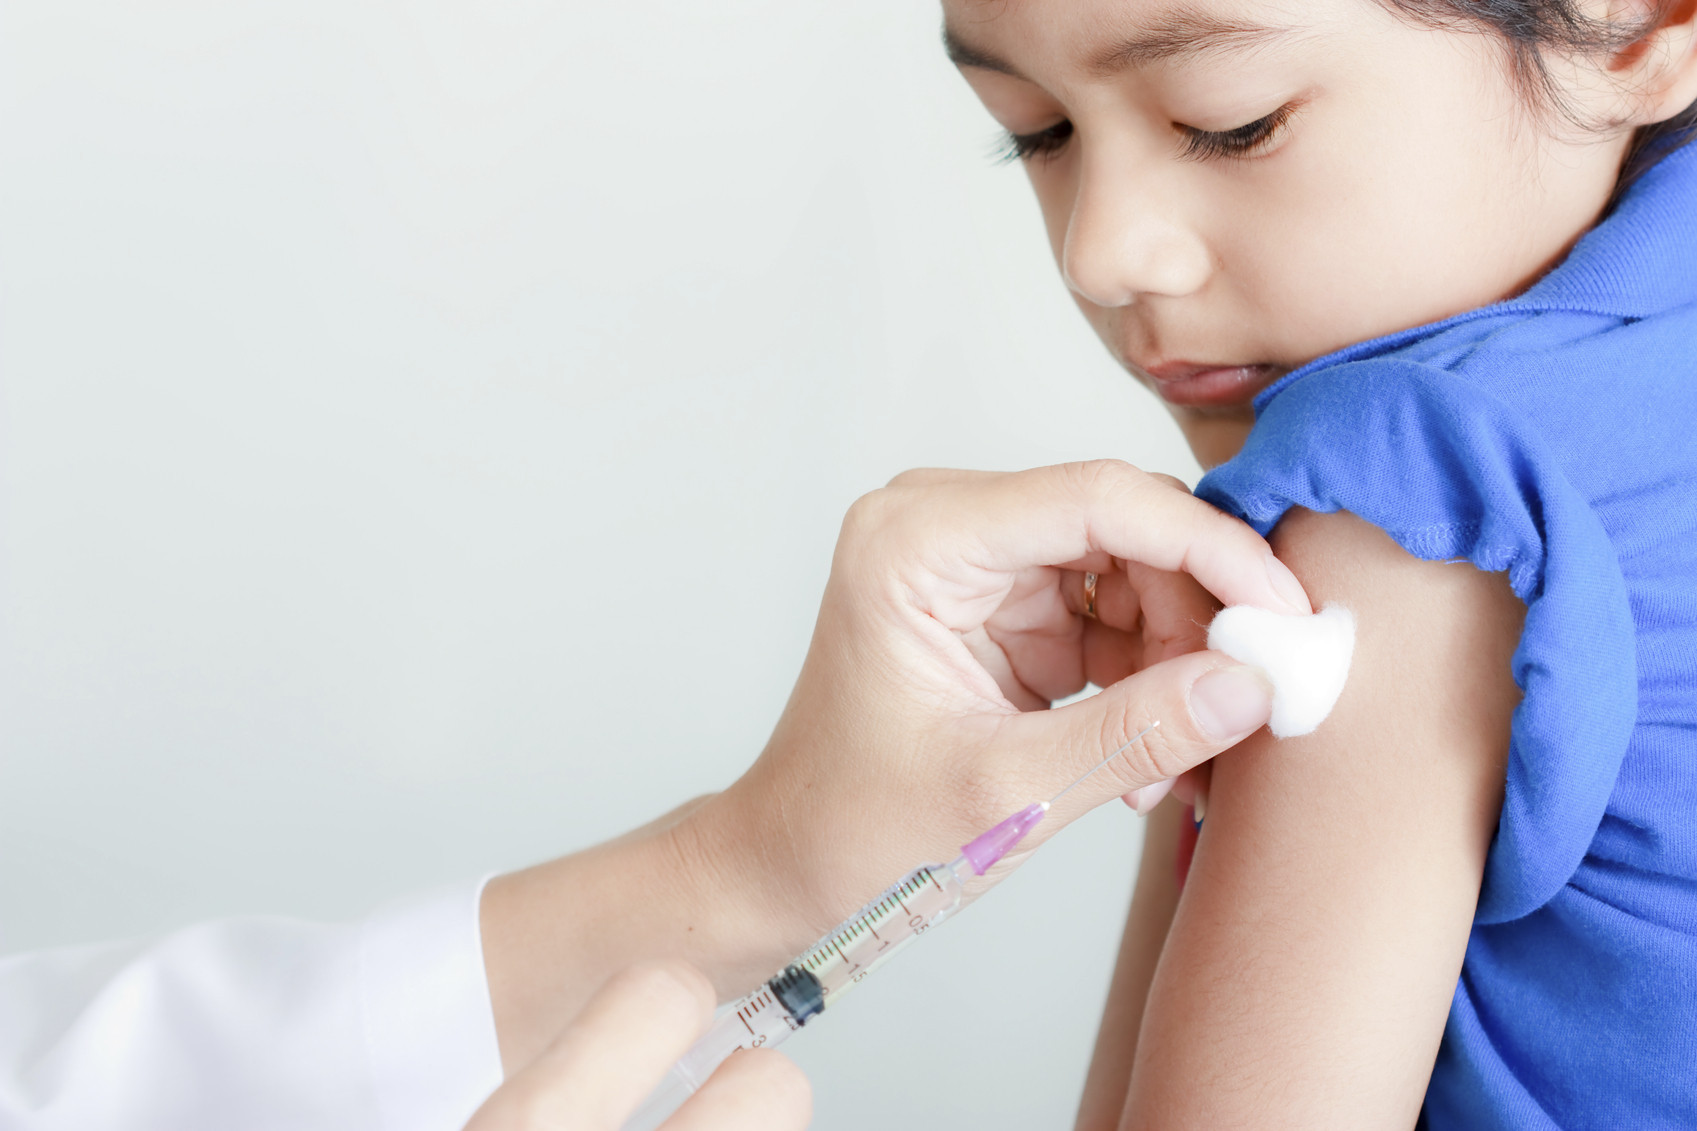 090616-vaccine-blog